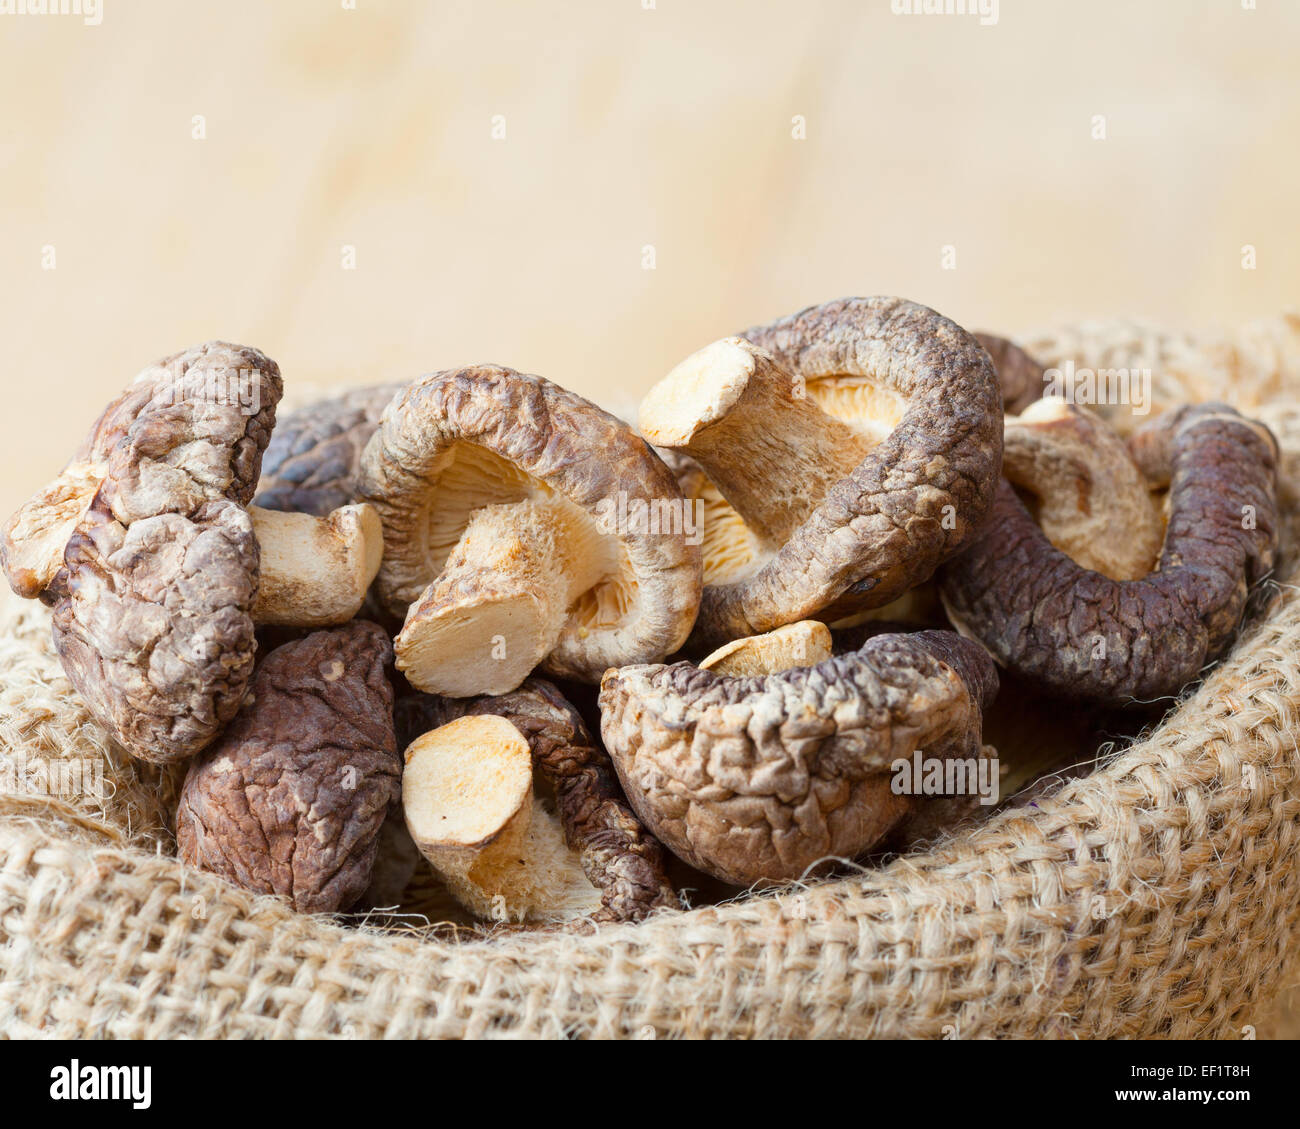 dried shiitake mushroom in hessian bag on wooden kitchen table Stock Photo